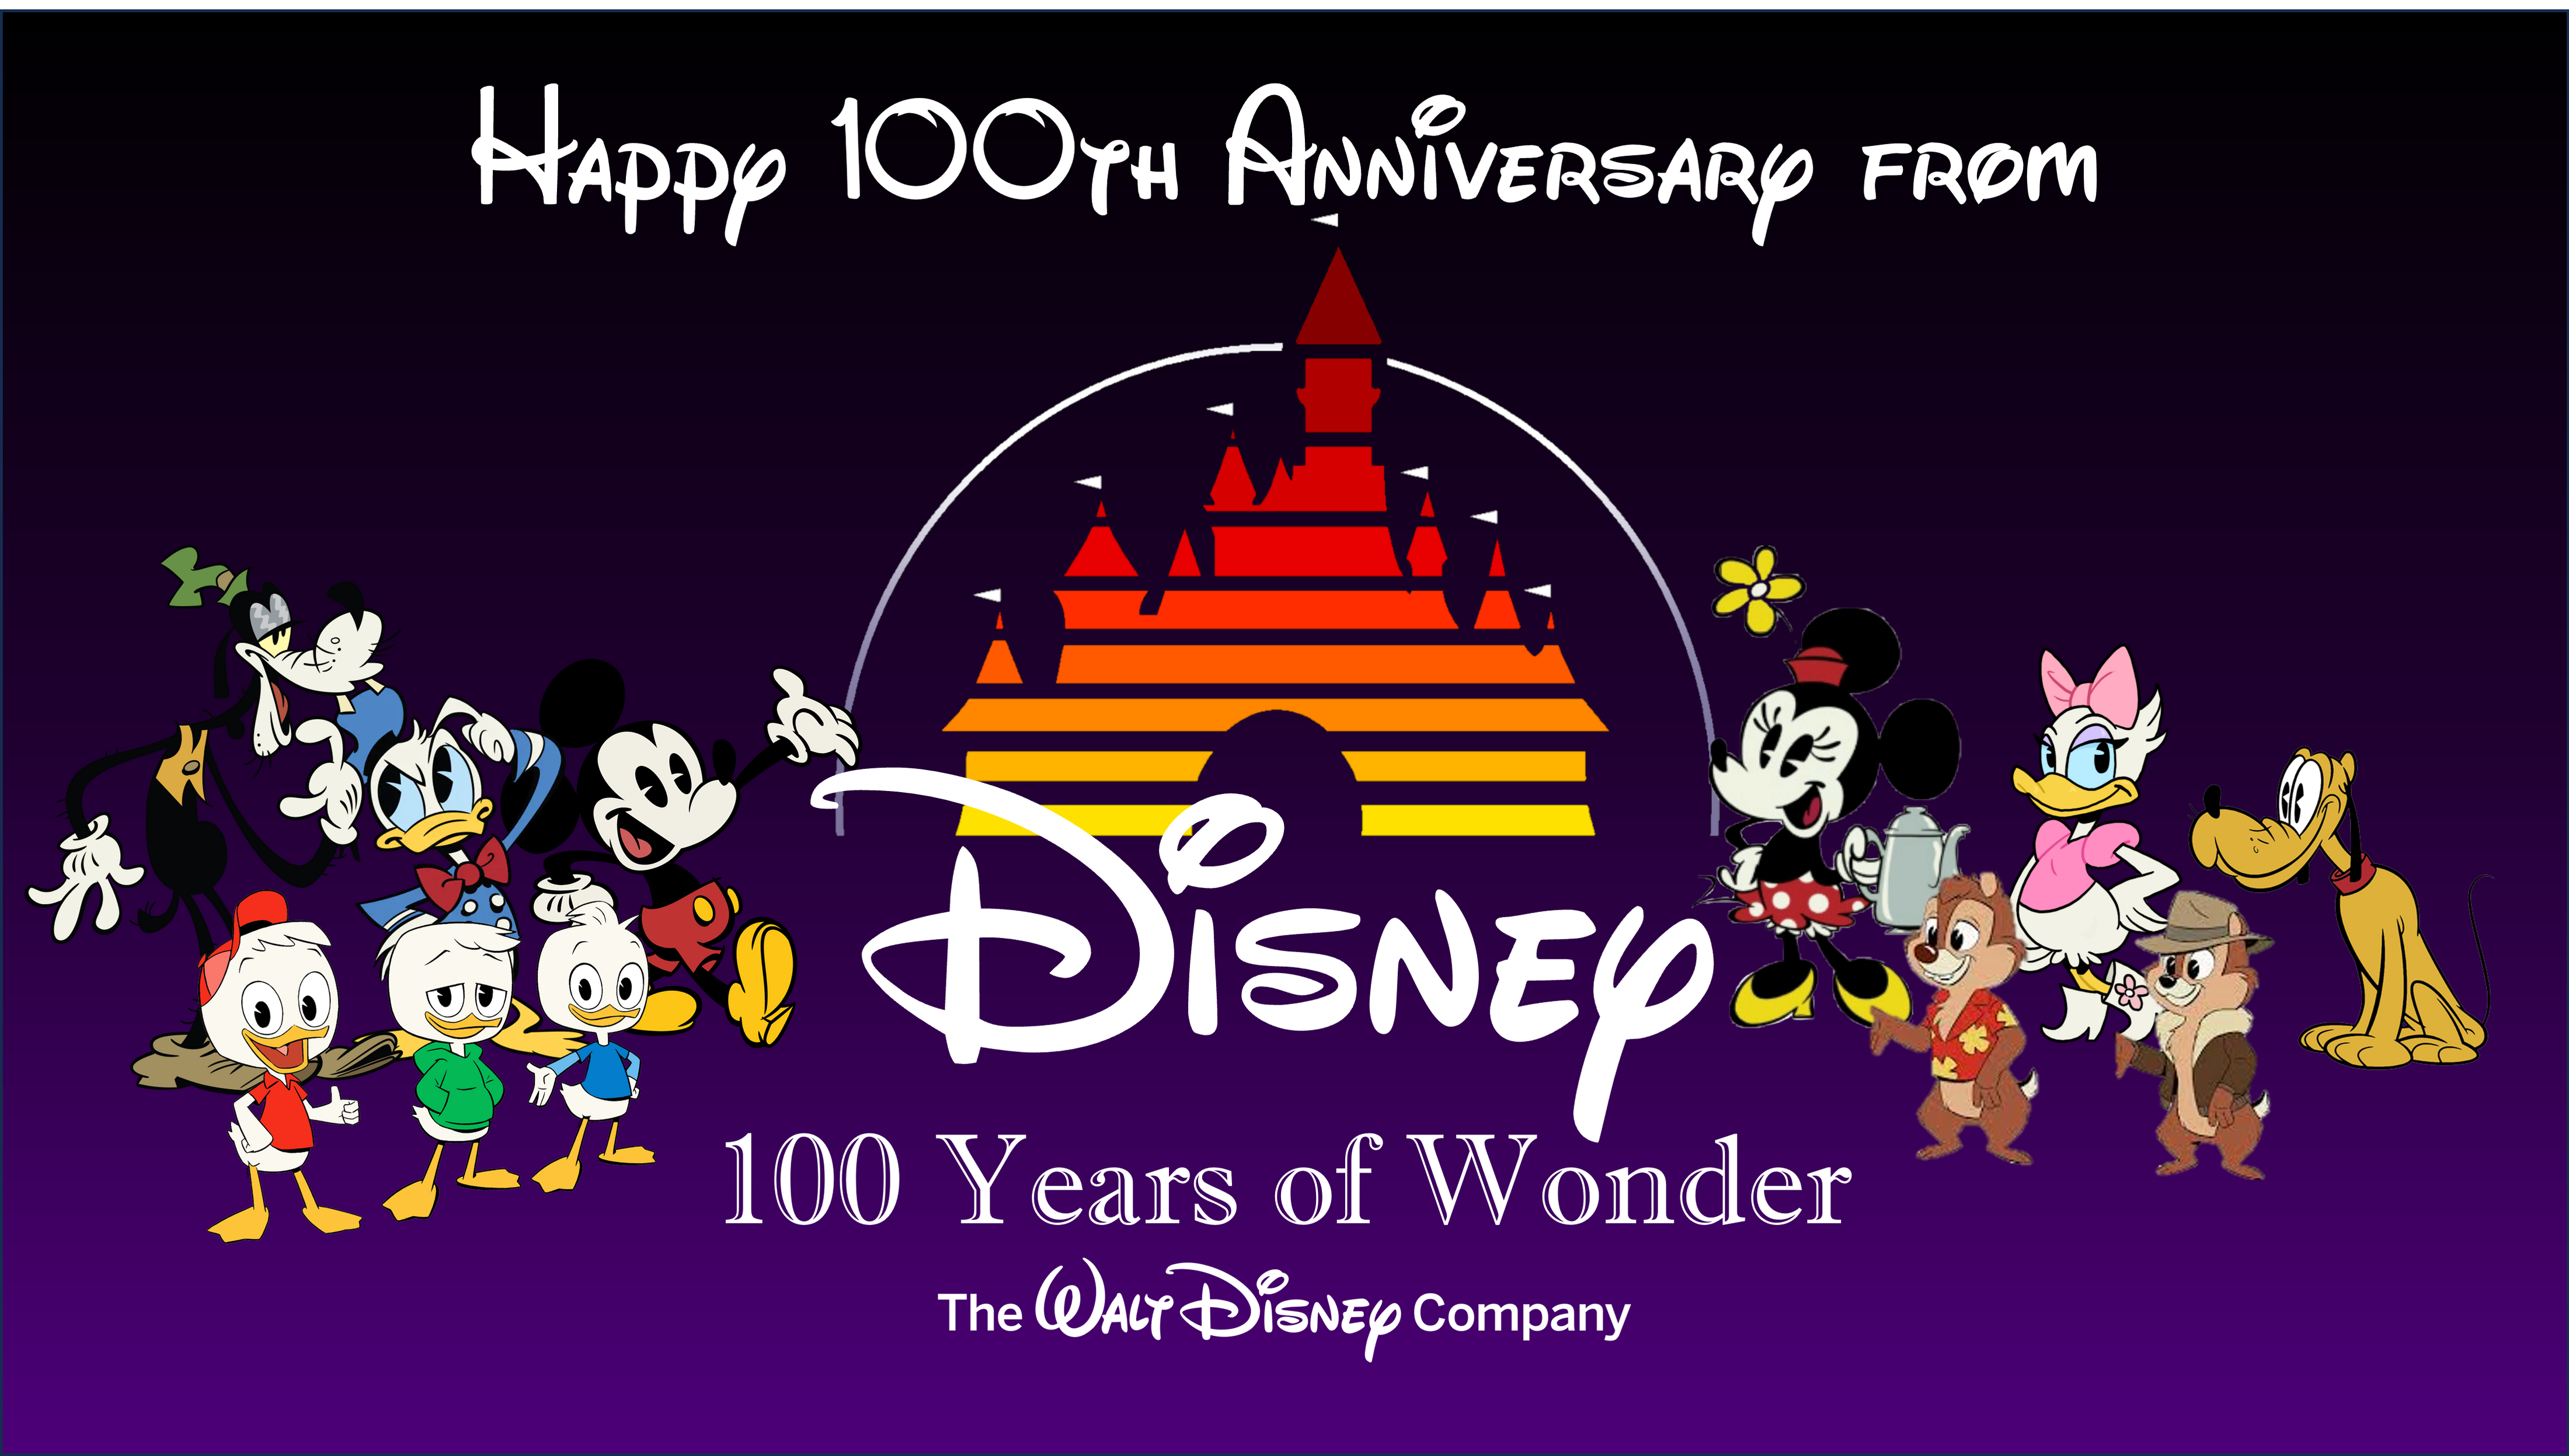 Happy 100th Anniversary from Disney by PeytonAuz1999 on DeviantArt